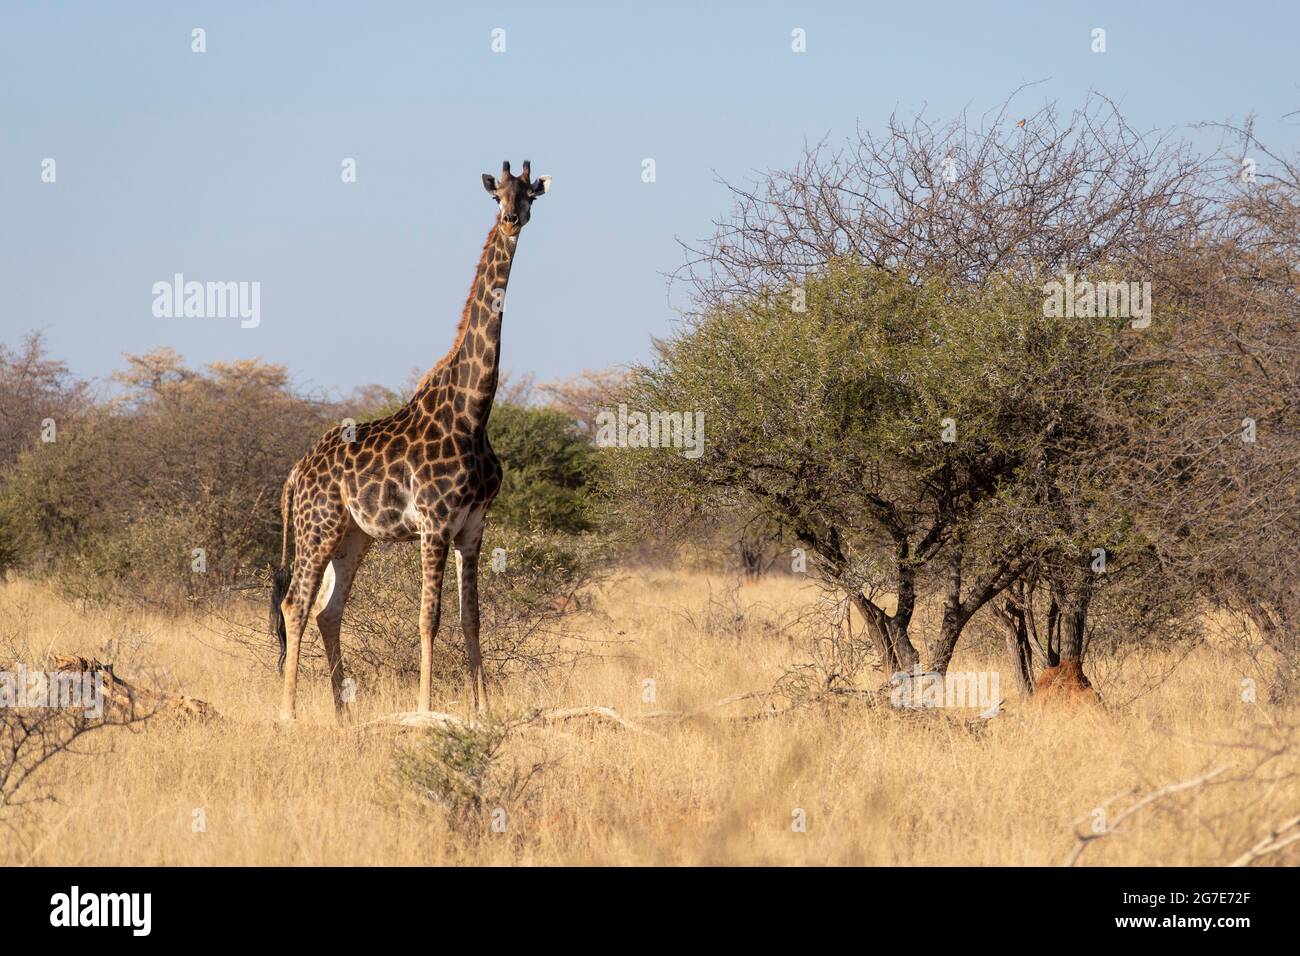 Giraffe in the bush in South Africa. Stock Photo